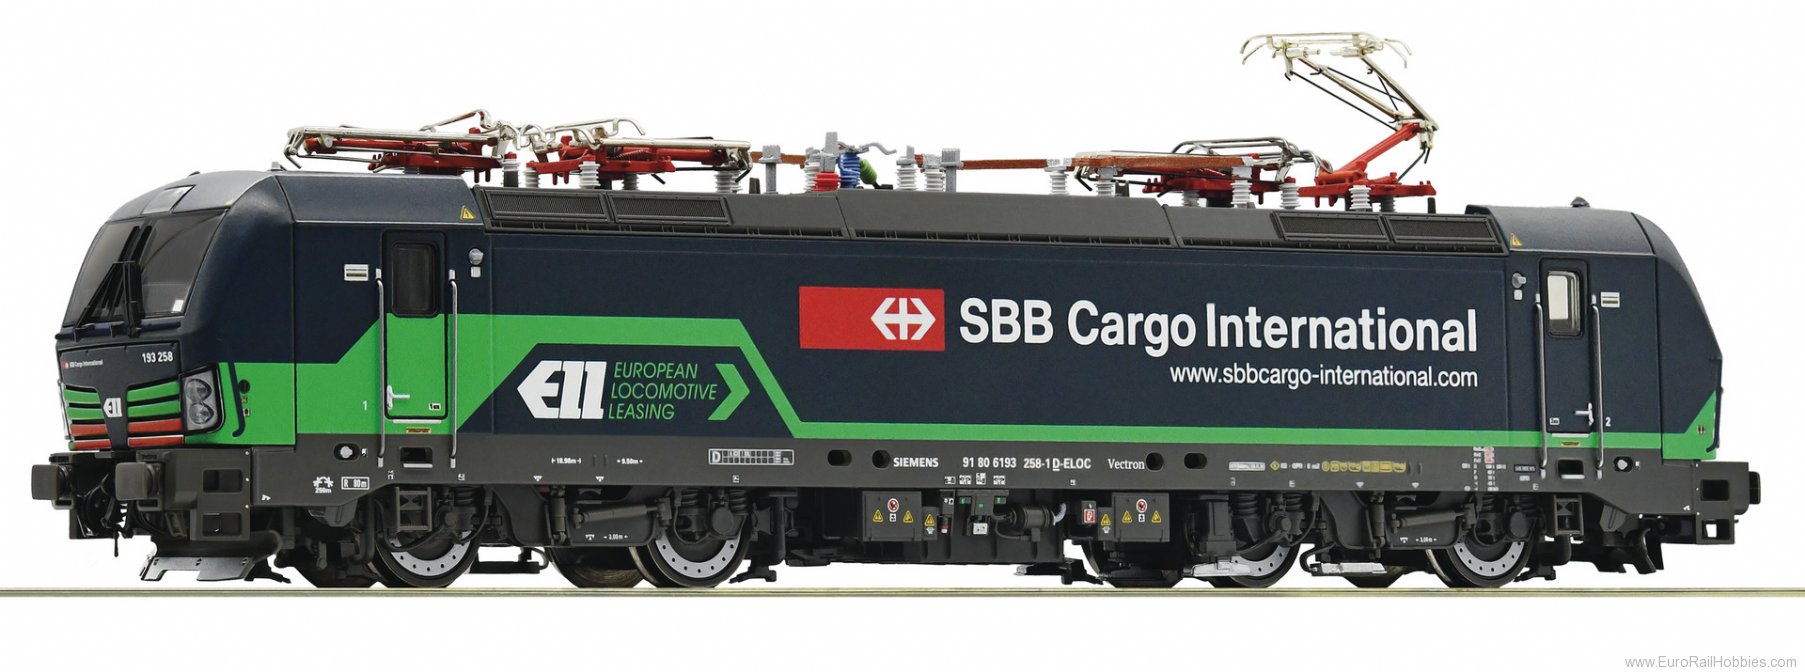 Roco 71955 SBB Cargo International Electric locomotive 1